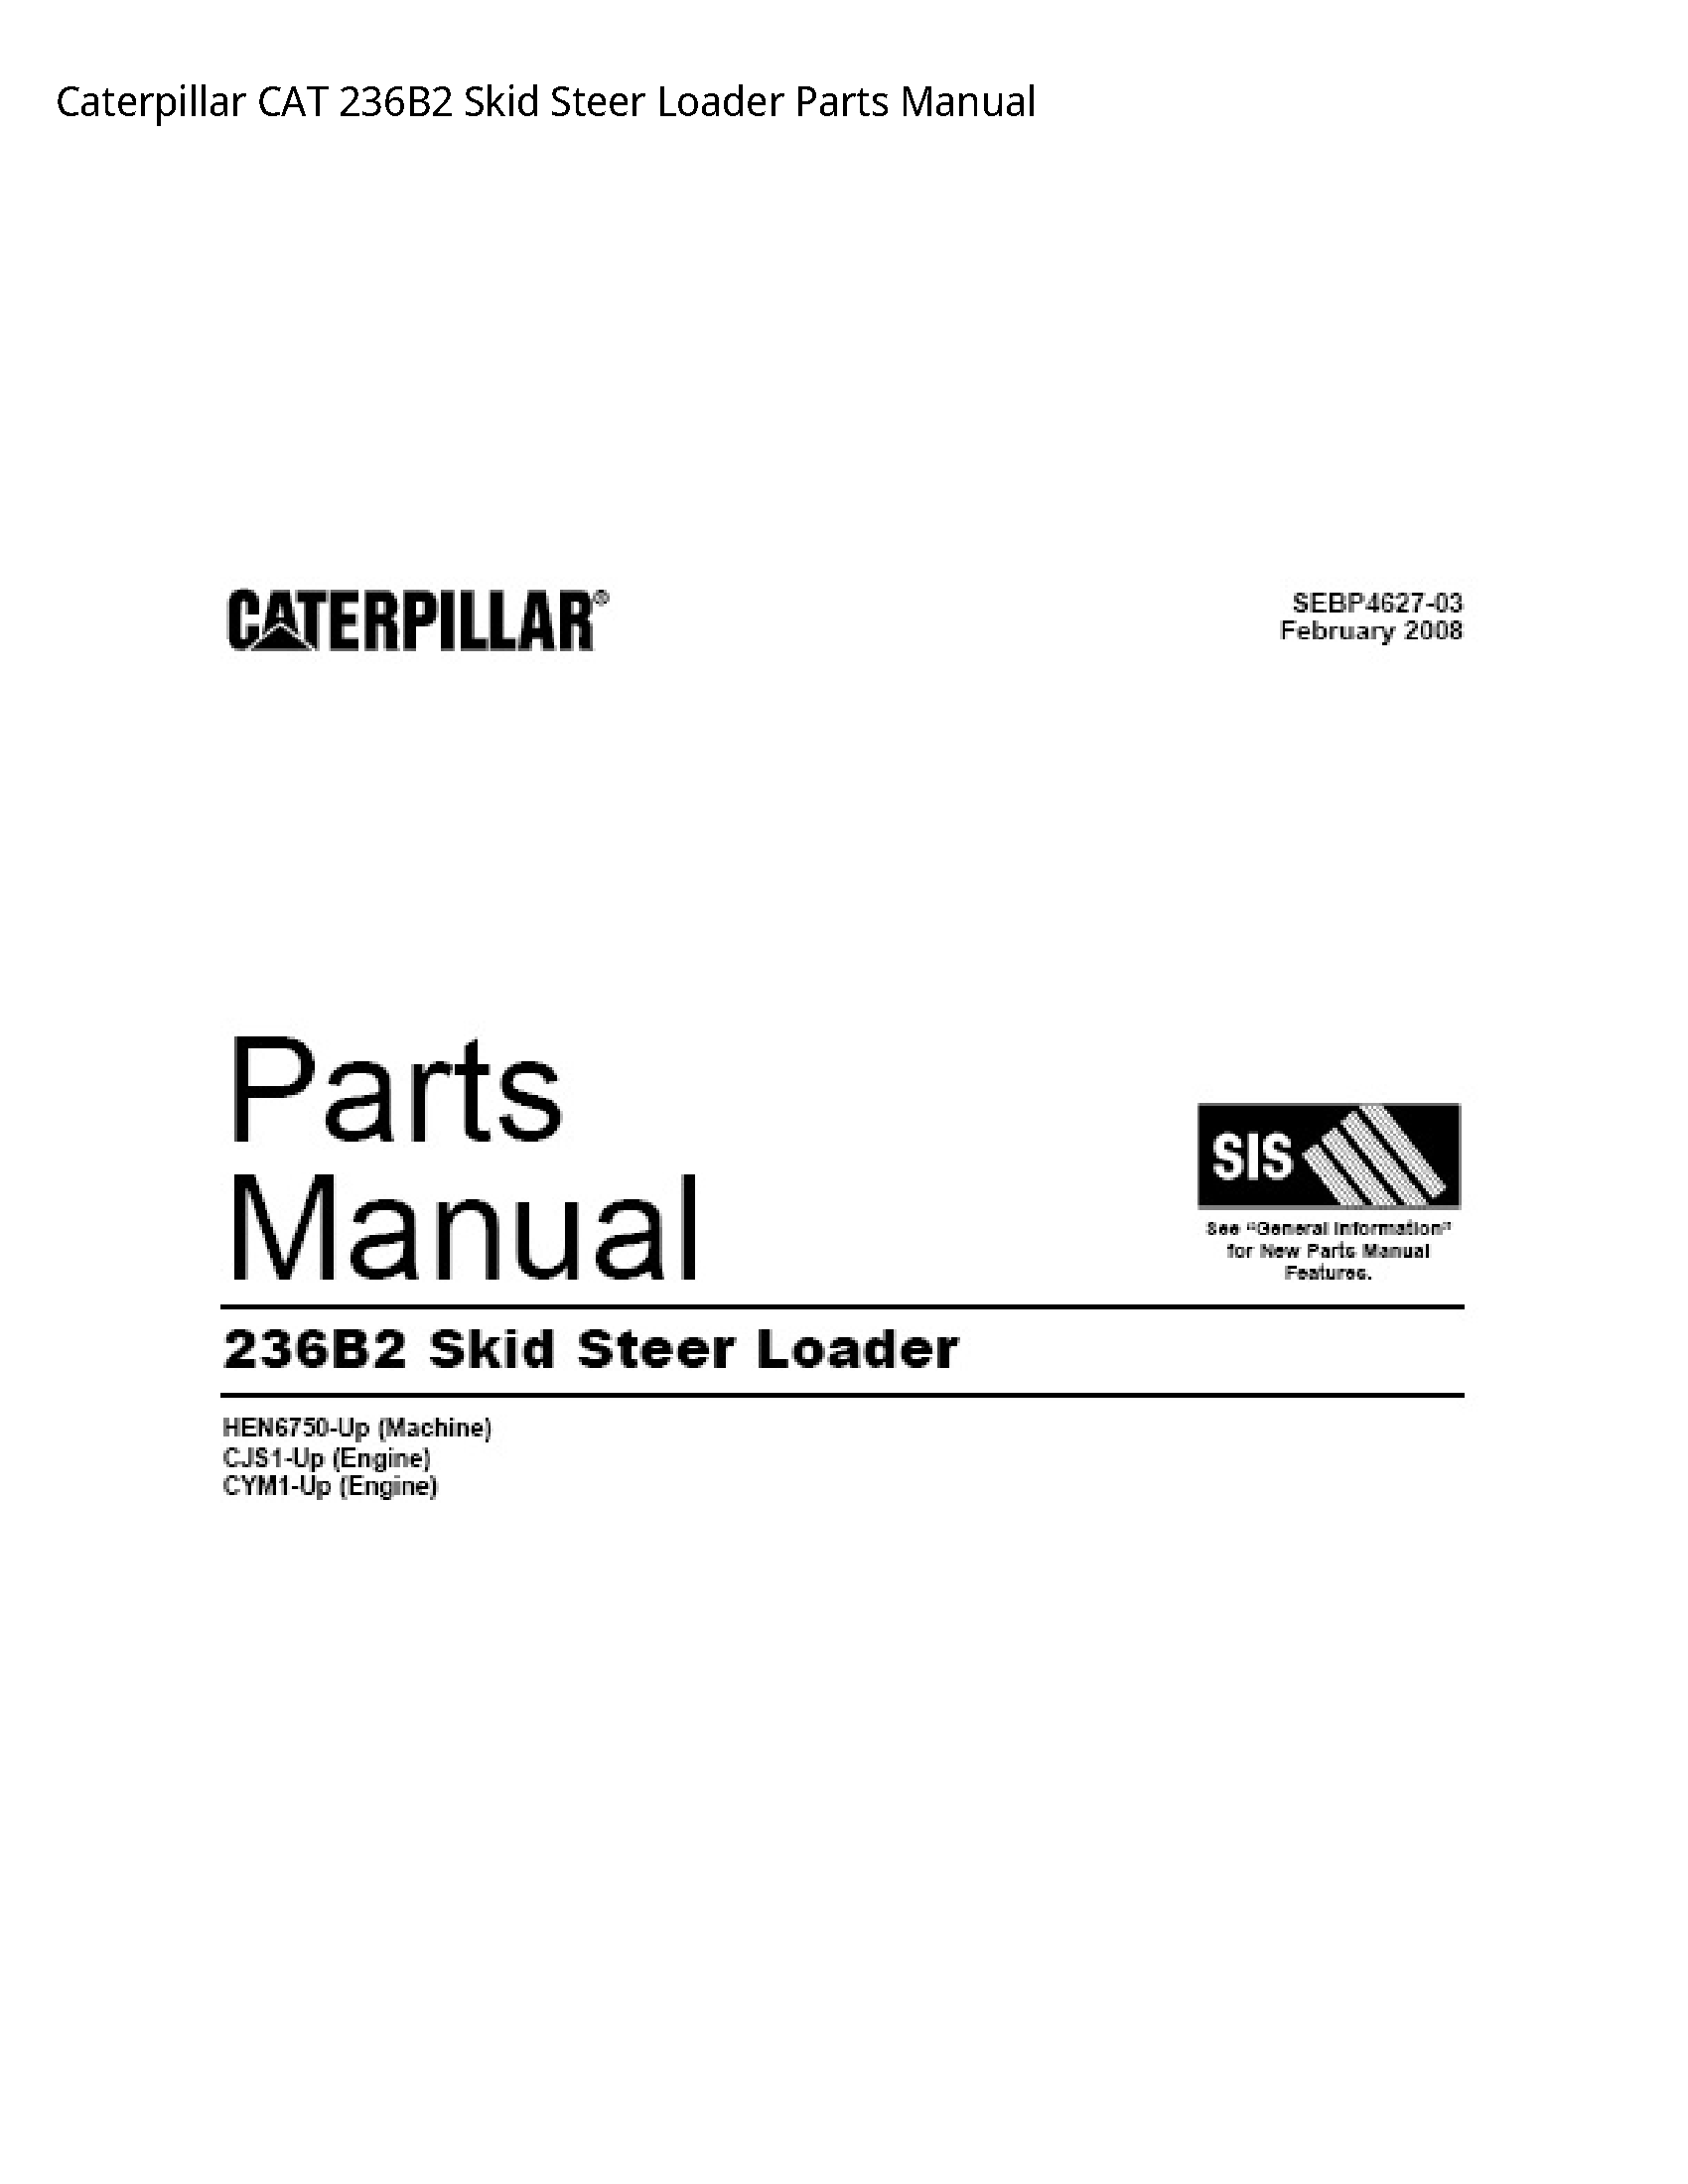 Caterpillar 236B2 CAT Skid Steer Loader Parts manual